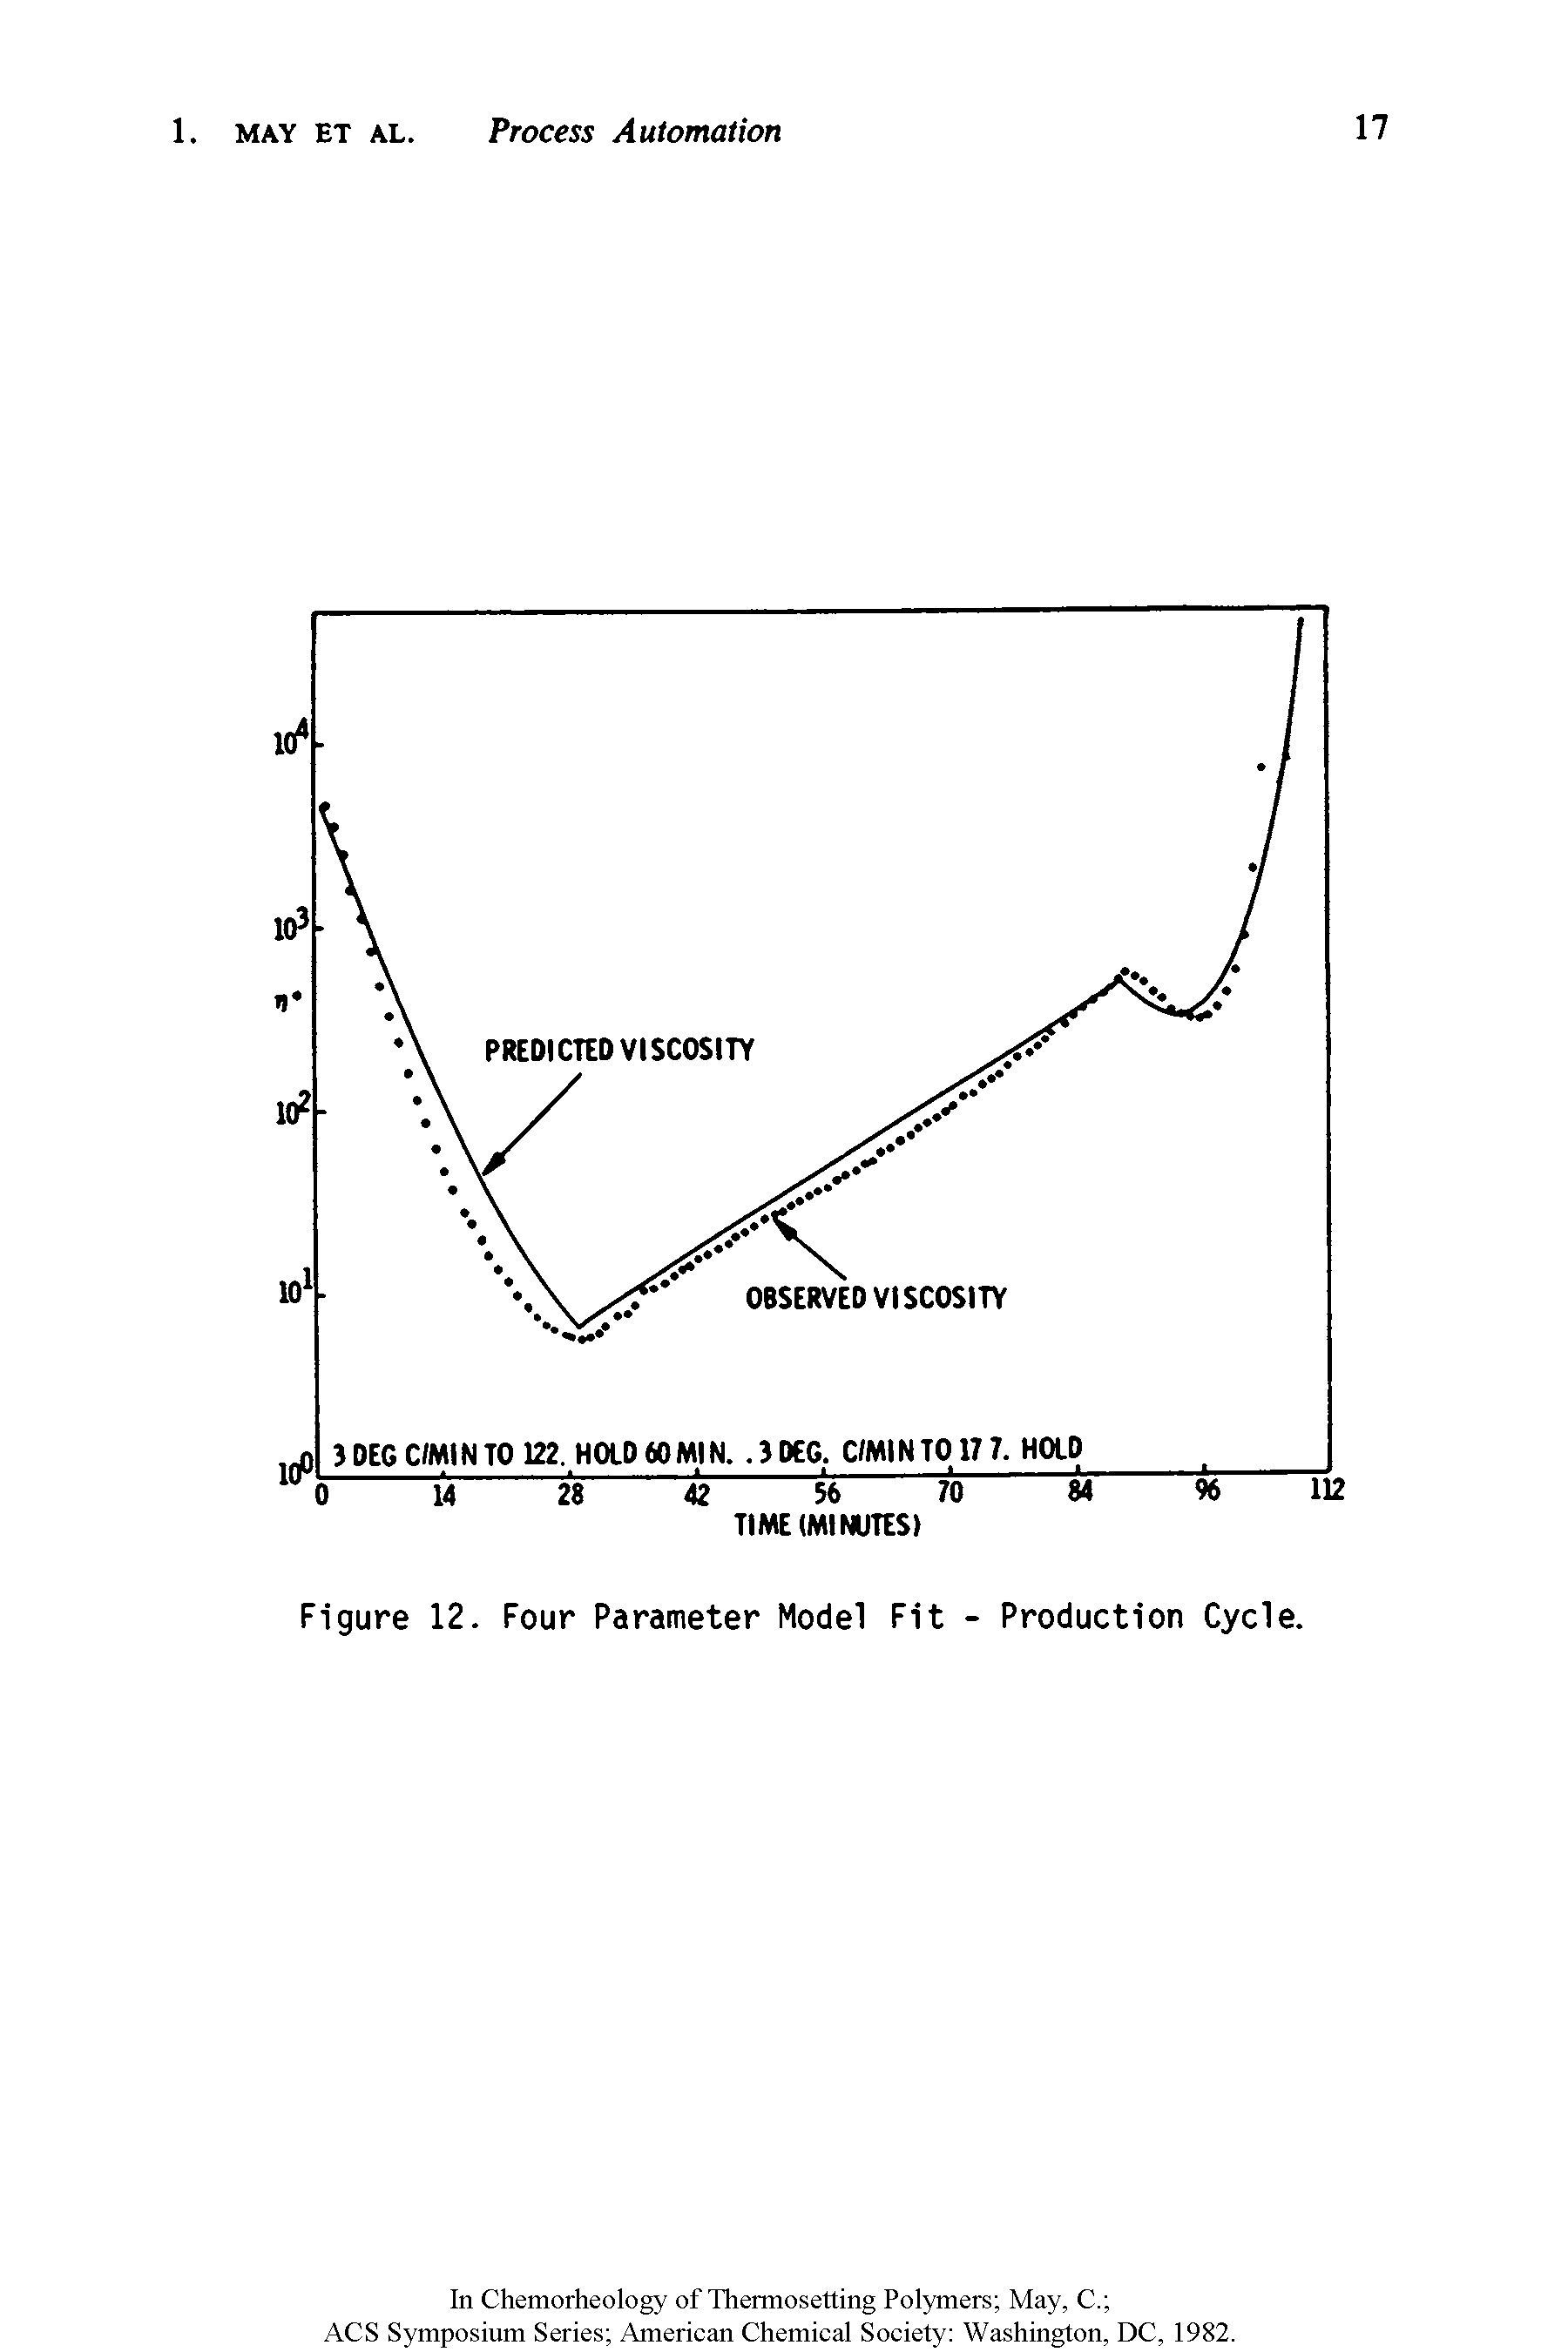 Figure 12. Four Parameter Model Fit - Production Cycle.